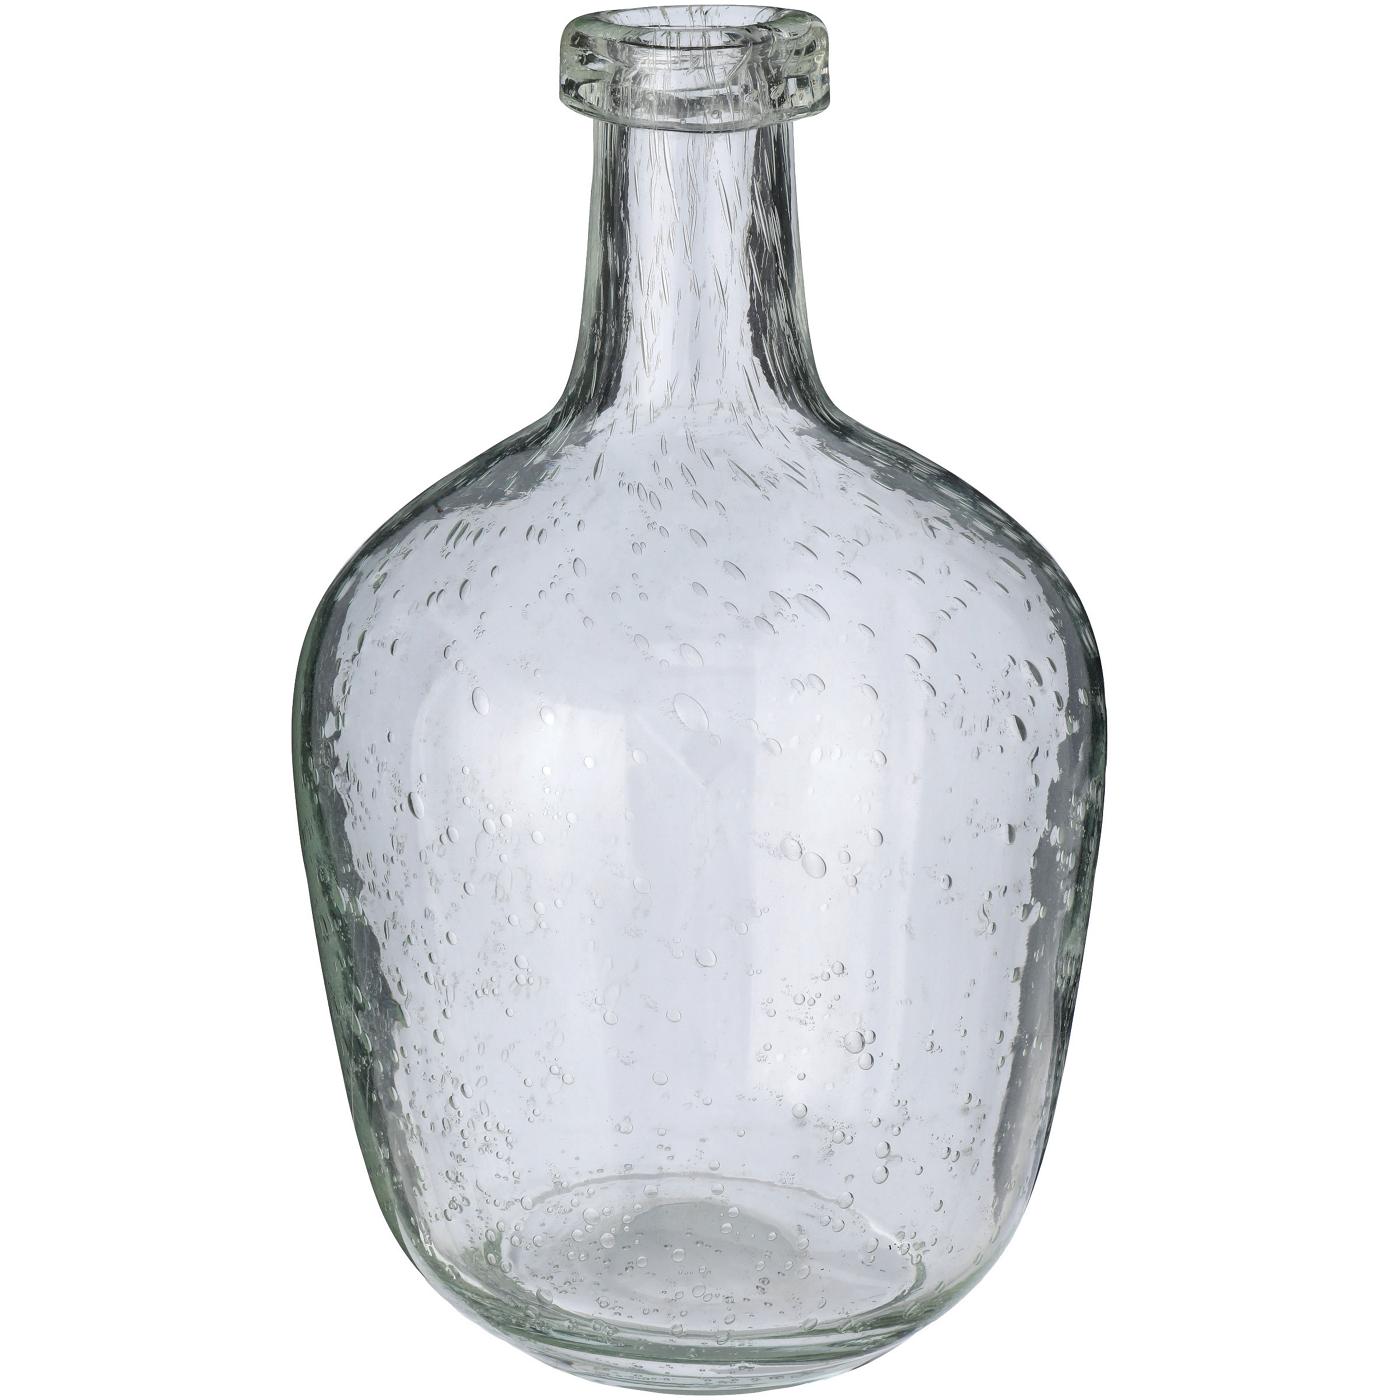 Haven + Key Decorative Glass Jug Vase; image 1 of 3